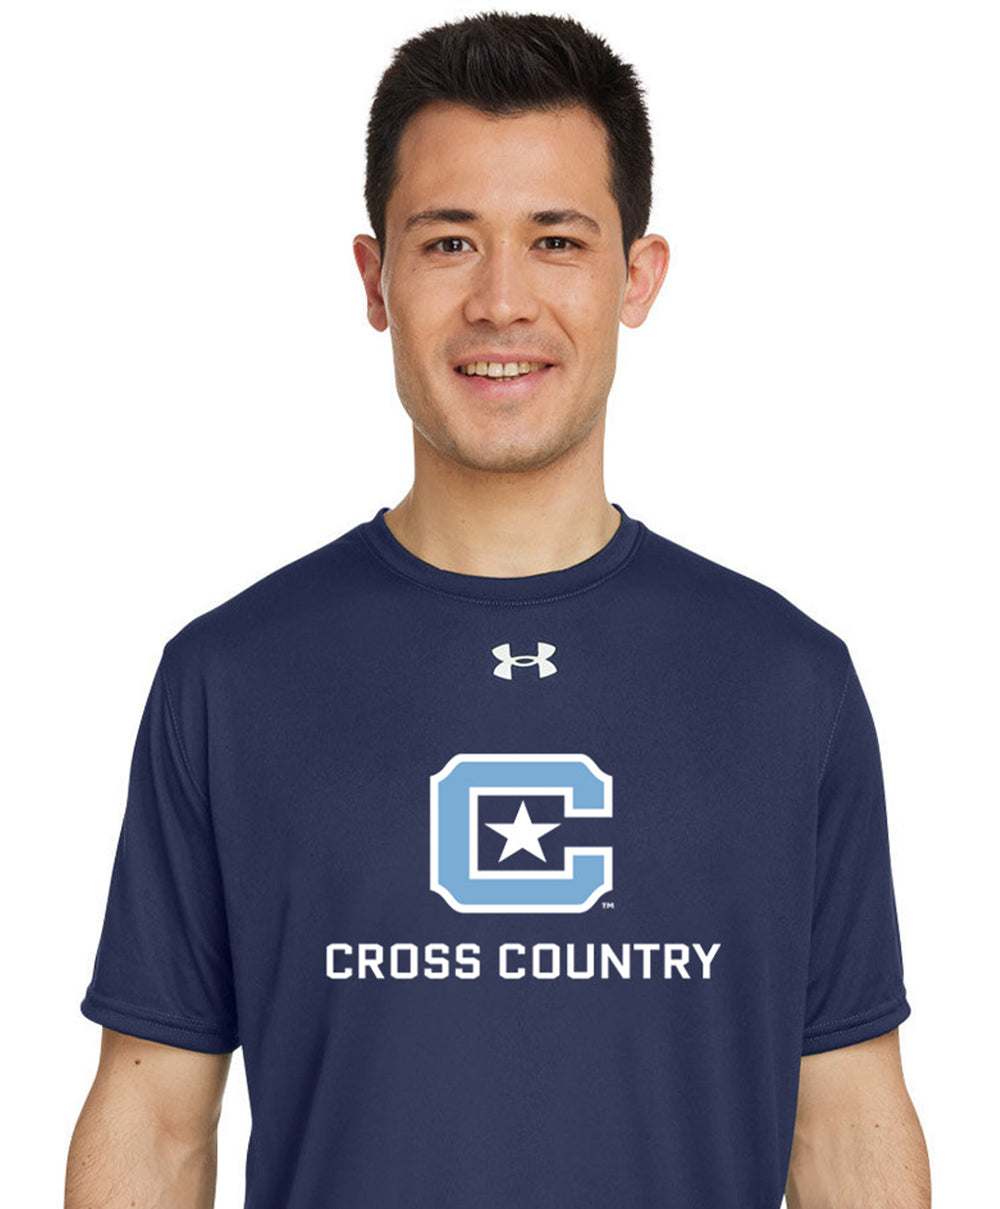 The Citadel, Club Sport - Cross Country Under Armour Men's Team Tech T-Shirt - Navy